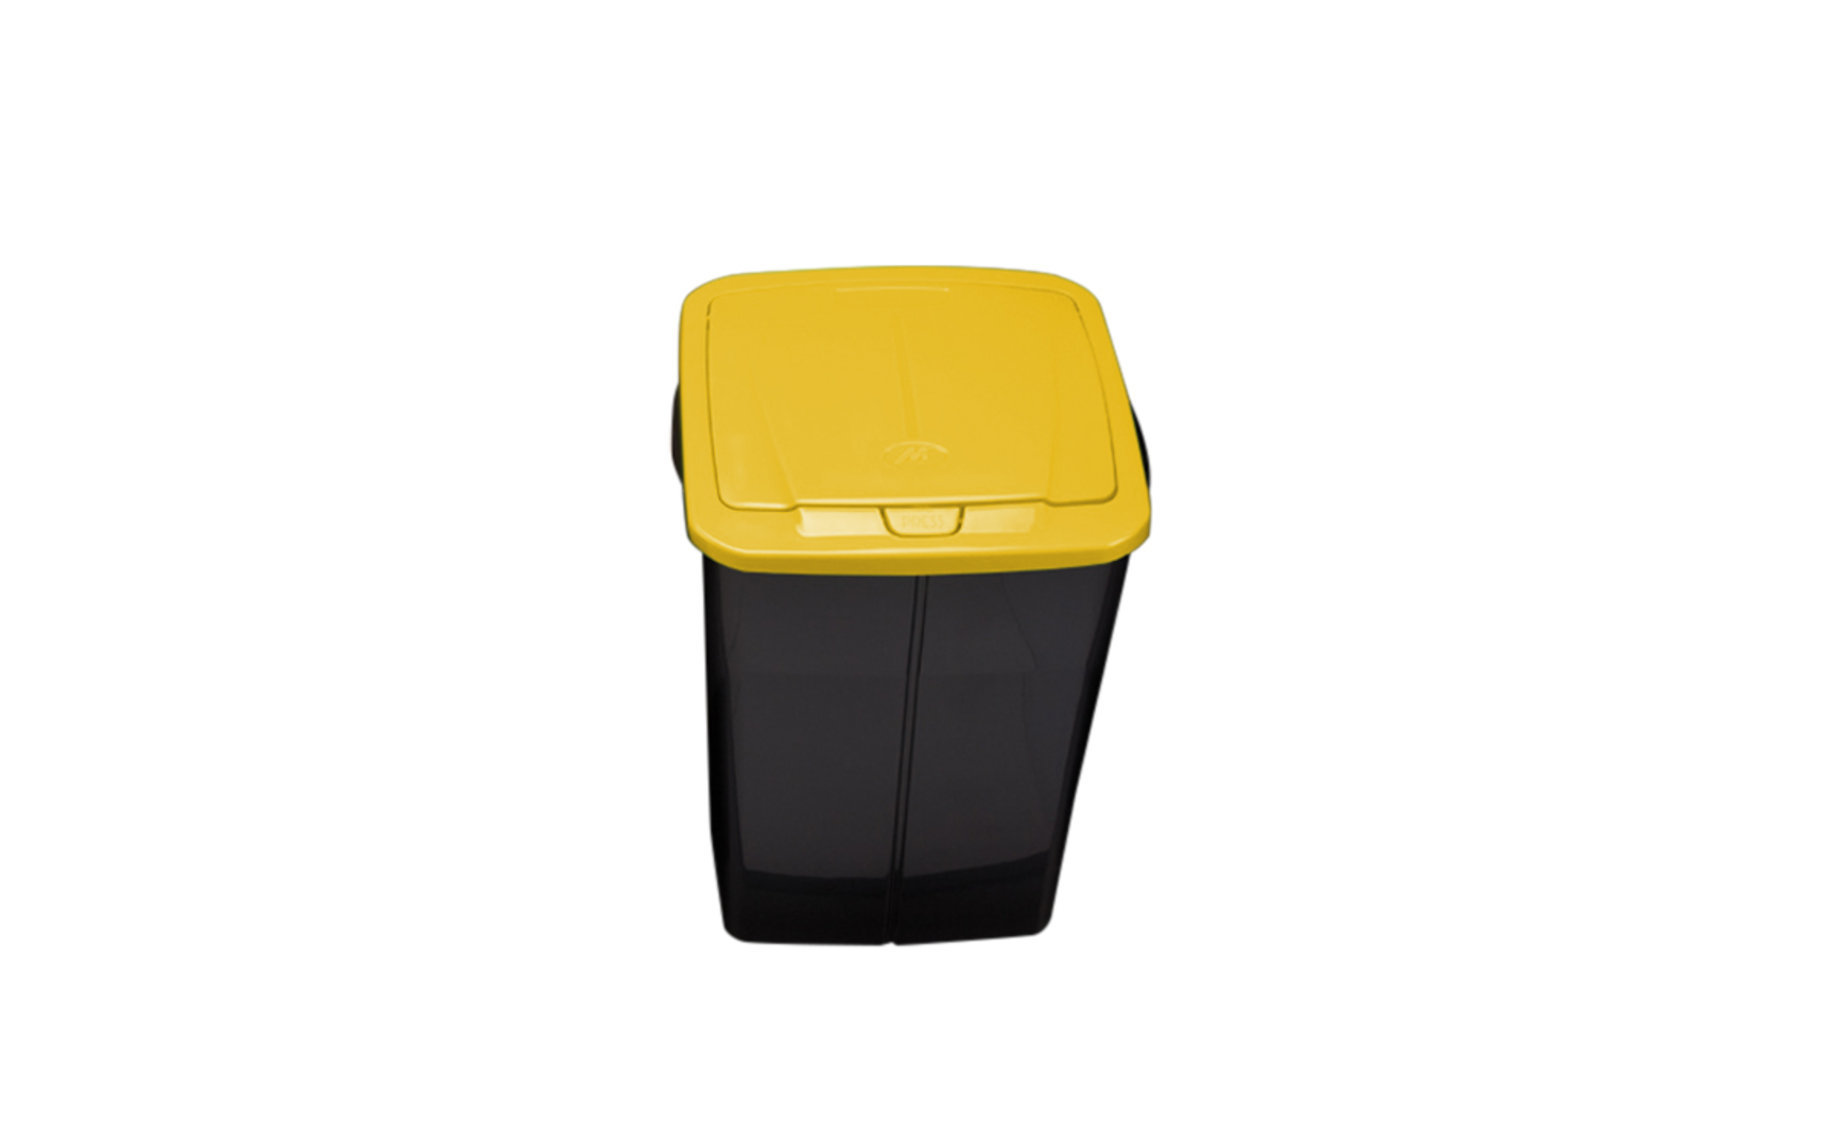 Kanta za smeće Ecobin 45l, žuti poklopac